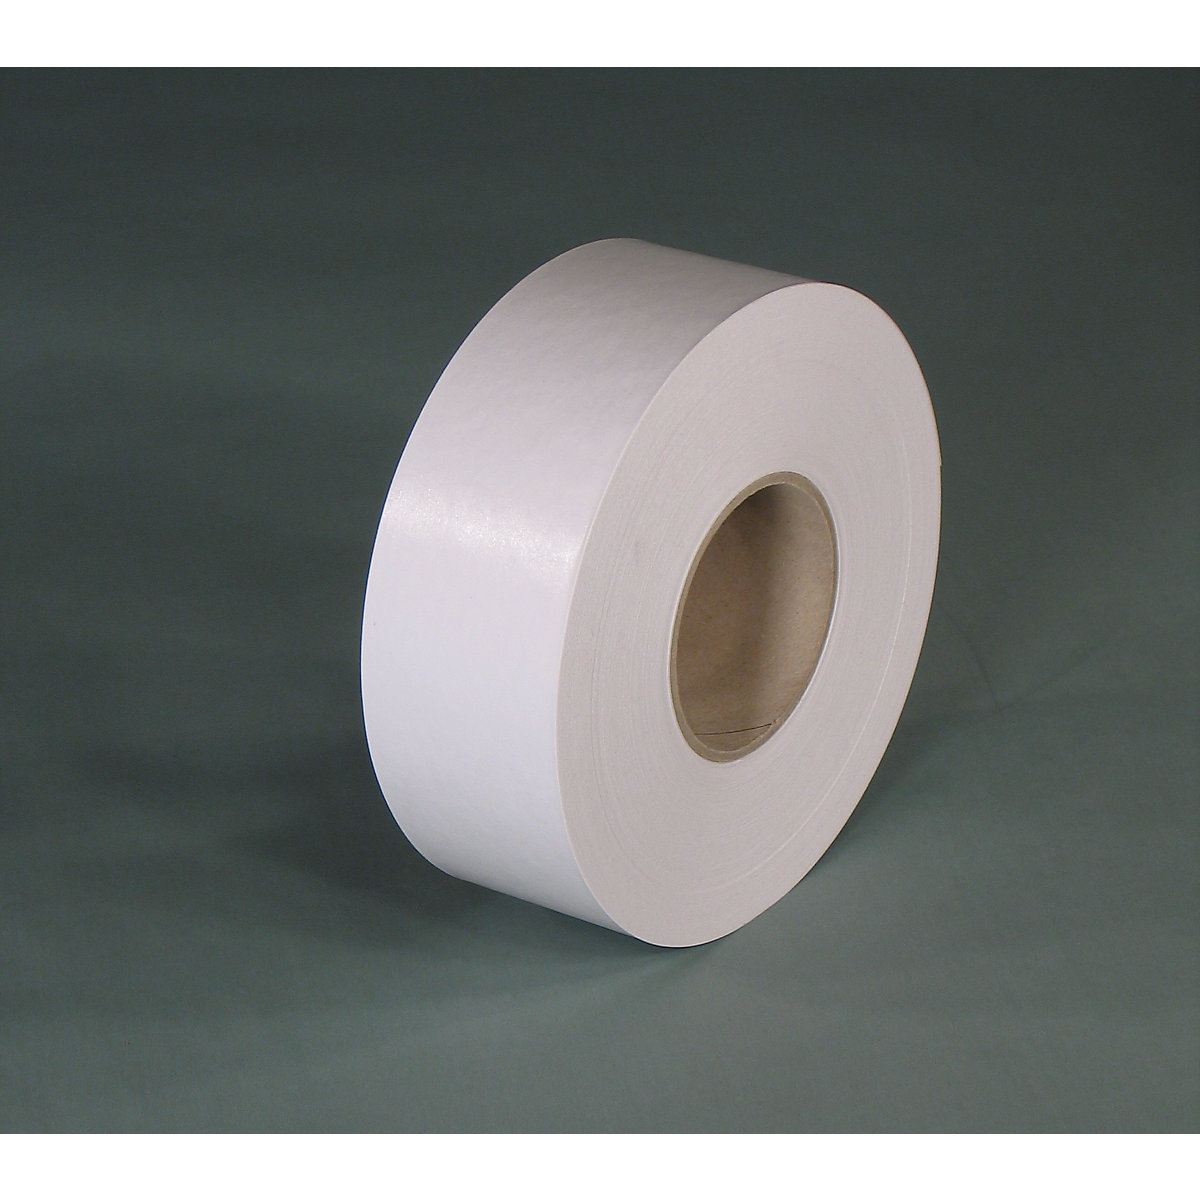 Cinta adhesiva en húmedo – eurokraft basic, modelo sencillo, UE 12 rollos, blanco, anchura de cinta 60 mm-1